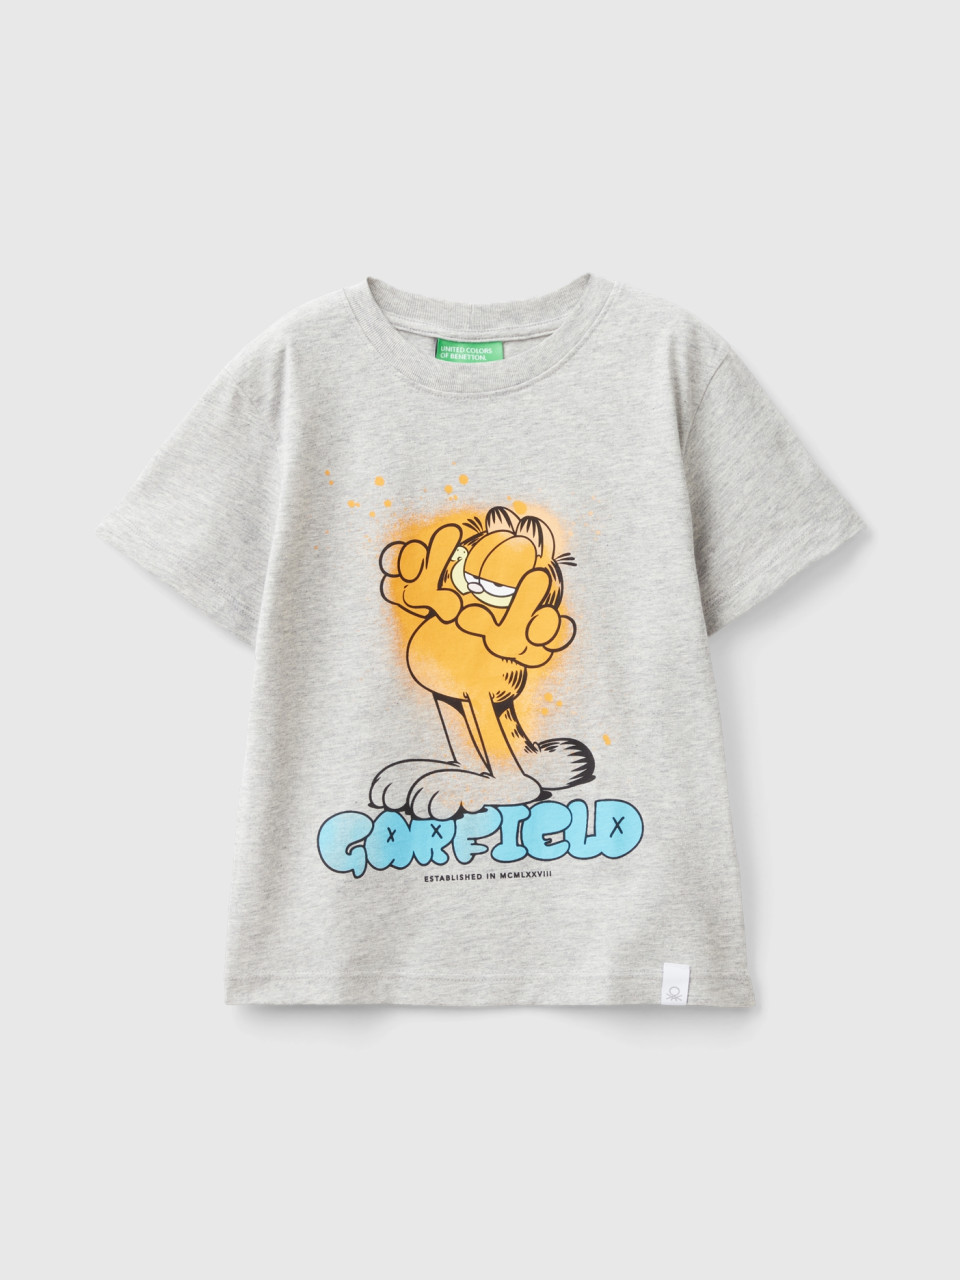 Benetton, Garfield T-shirt ©2024 By Paws, size 3-4, Light Gray